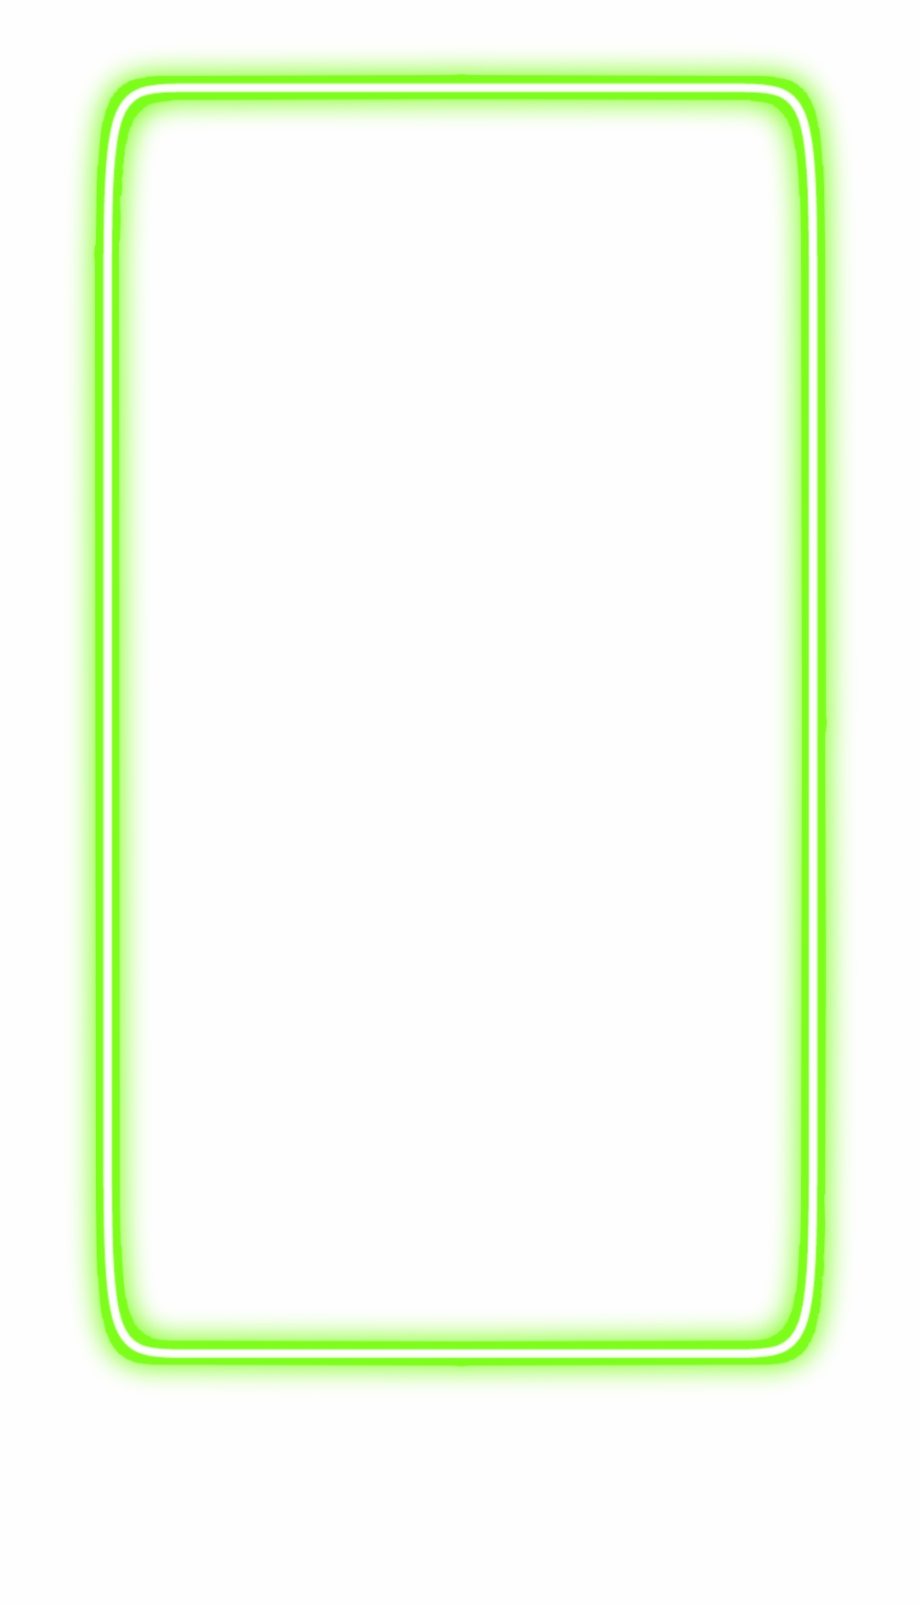 Neon Rectangle Freetoedit Green Frame Border Display Device